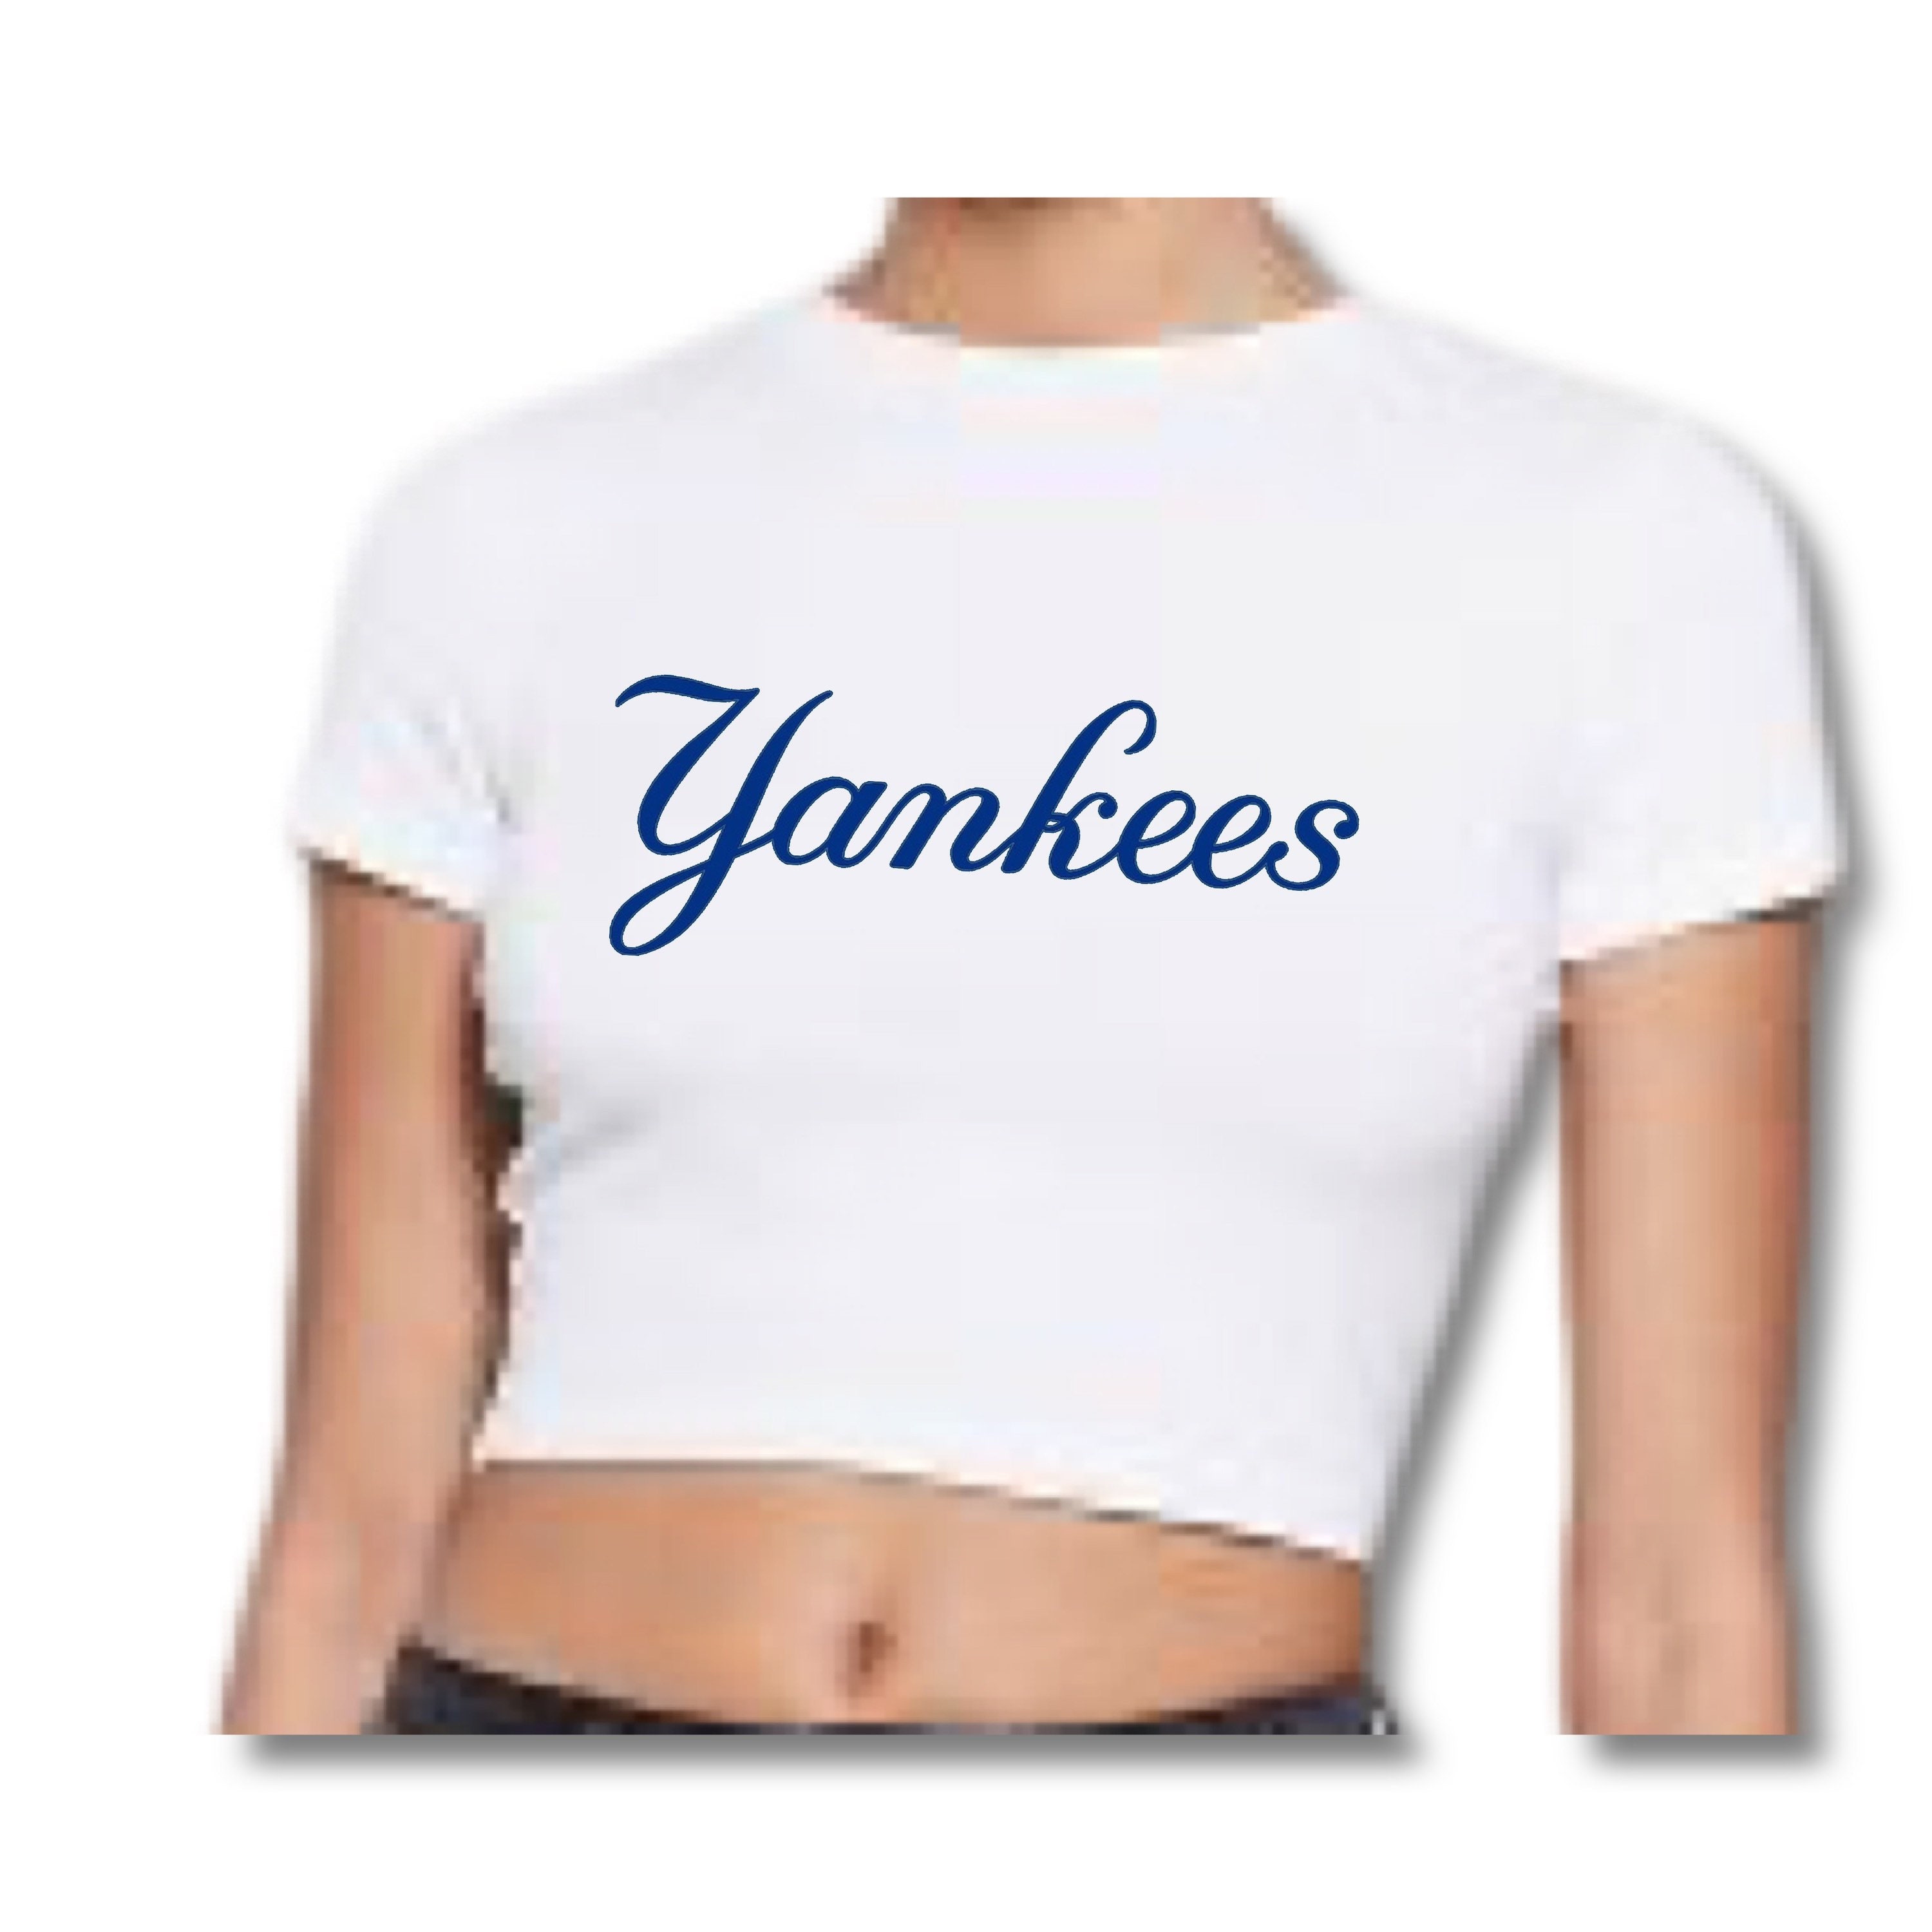 HanukkahHouse Yankees Cropped Tees and Tanks